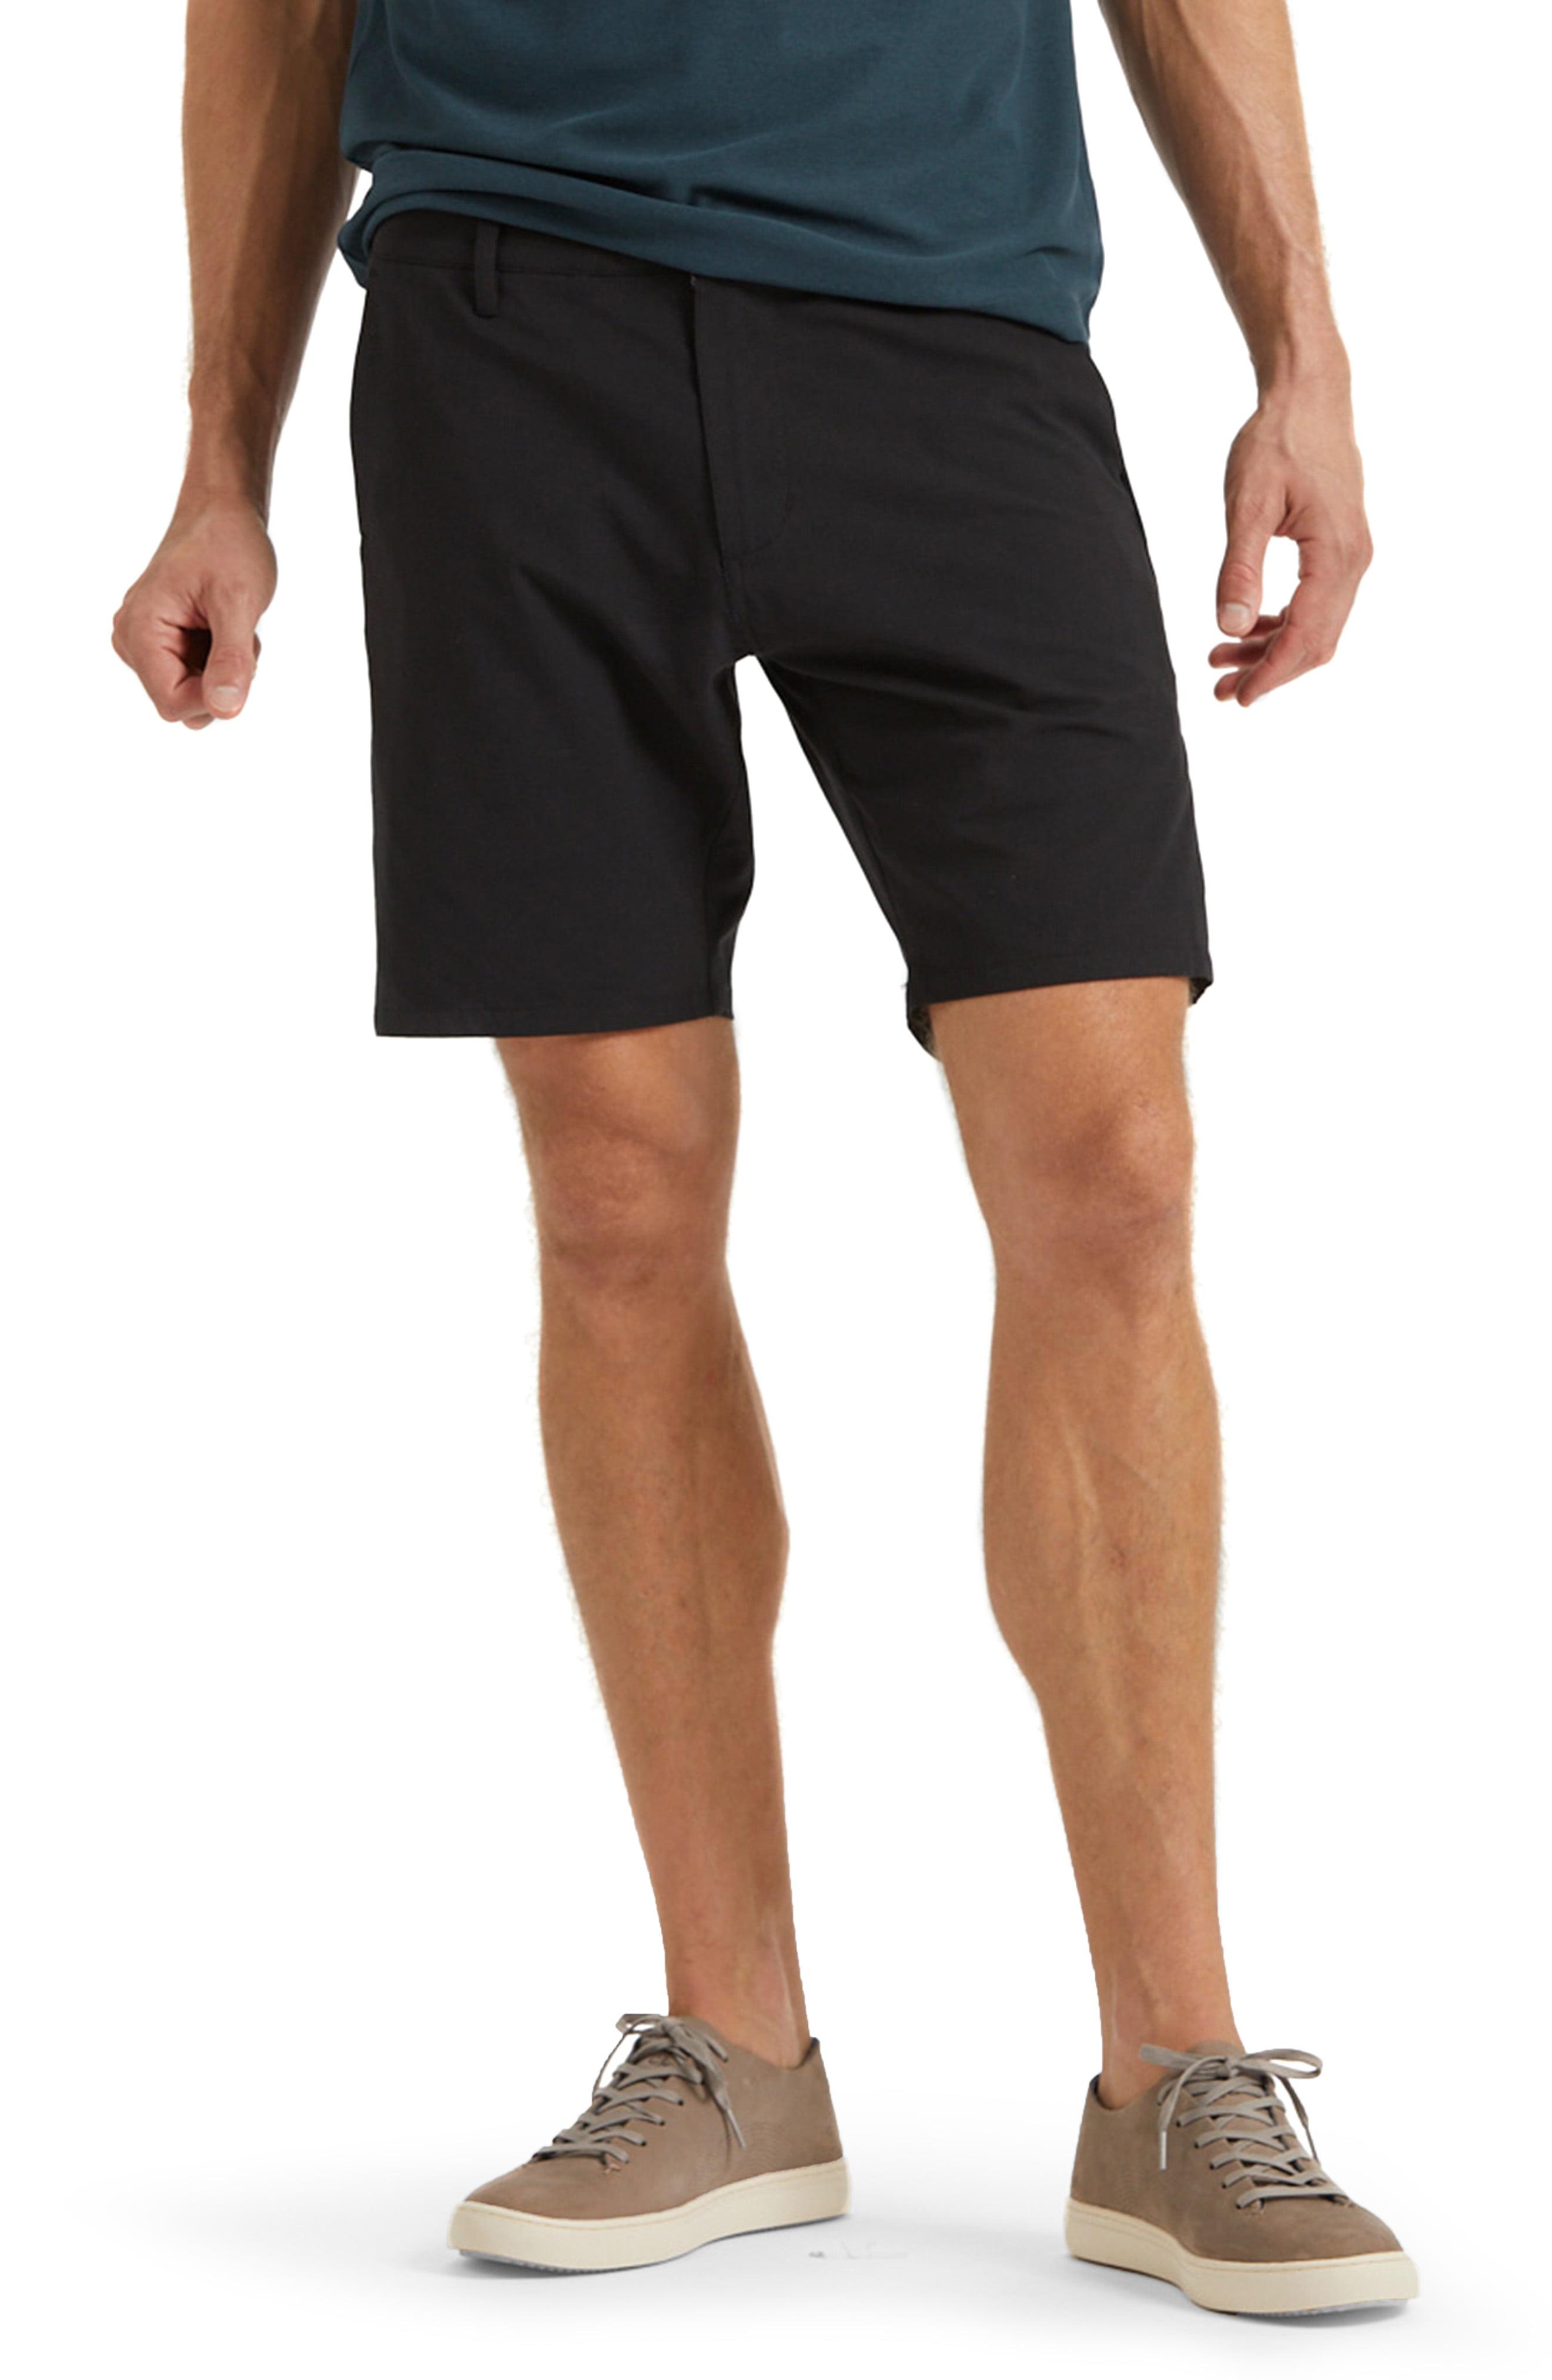 Vuori Aim Shorts in Charcoal (Black) for Men - Lyst